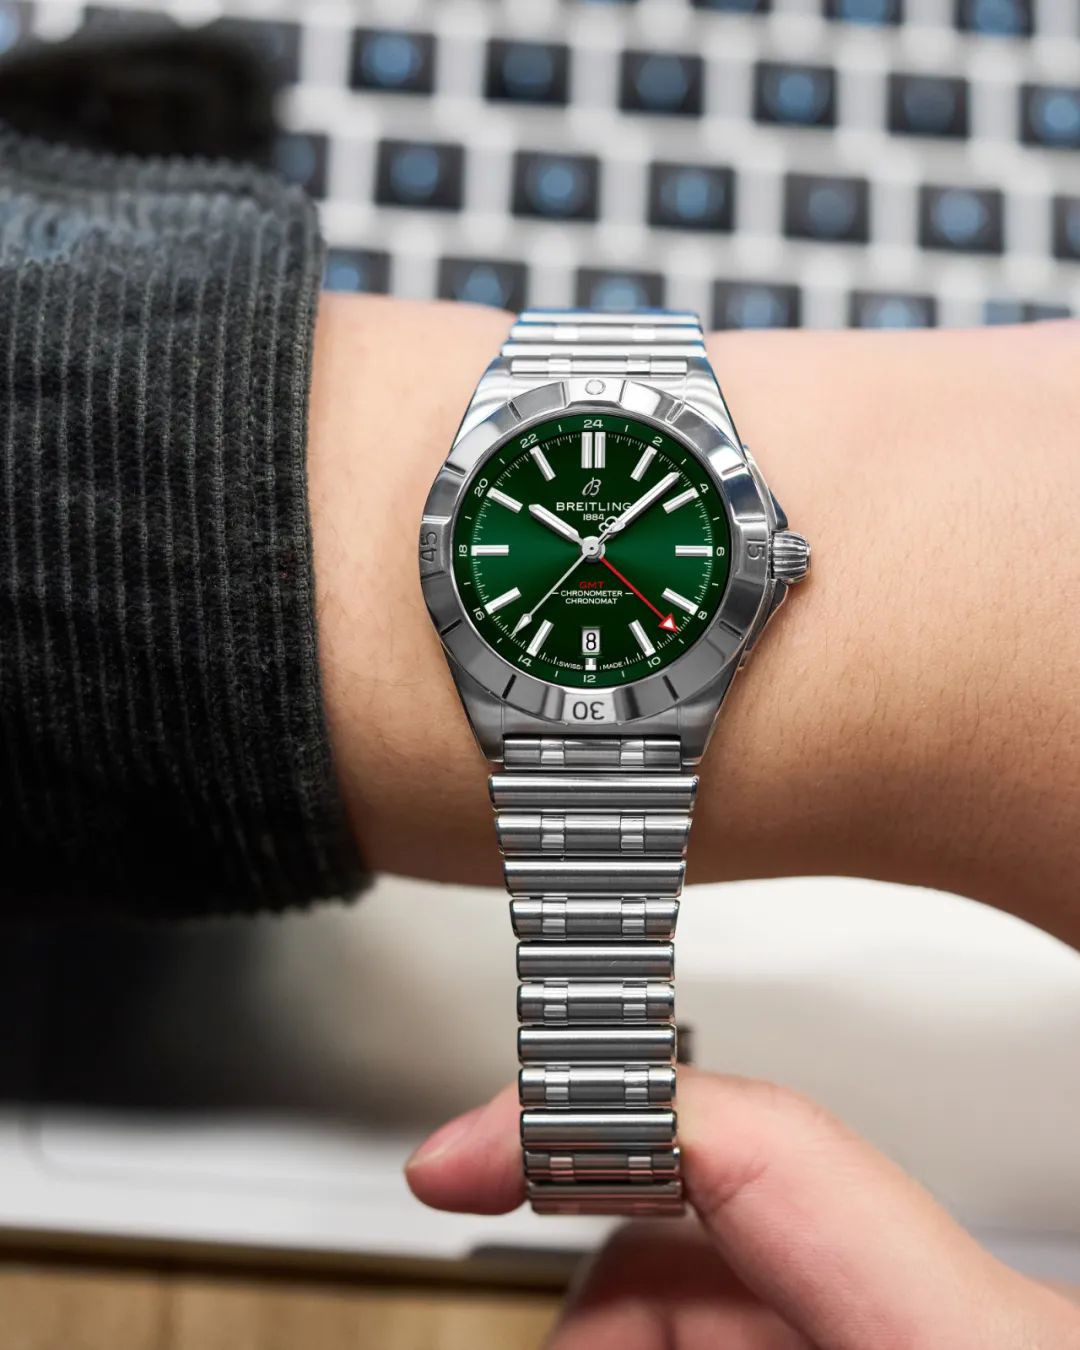 Breitling replica watch model 14